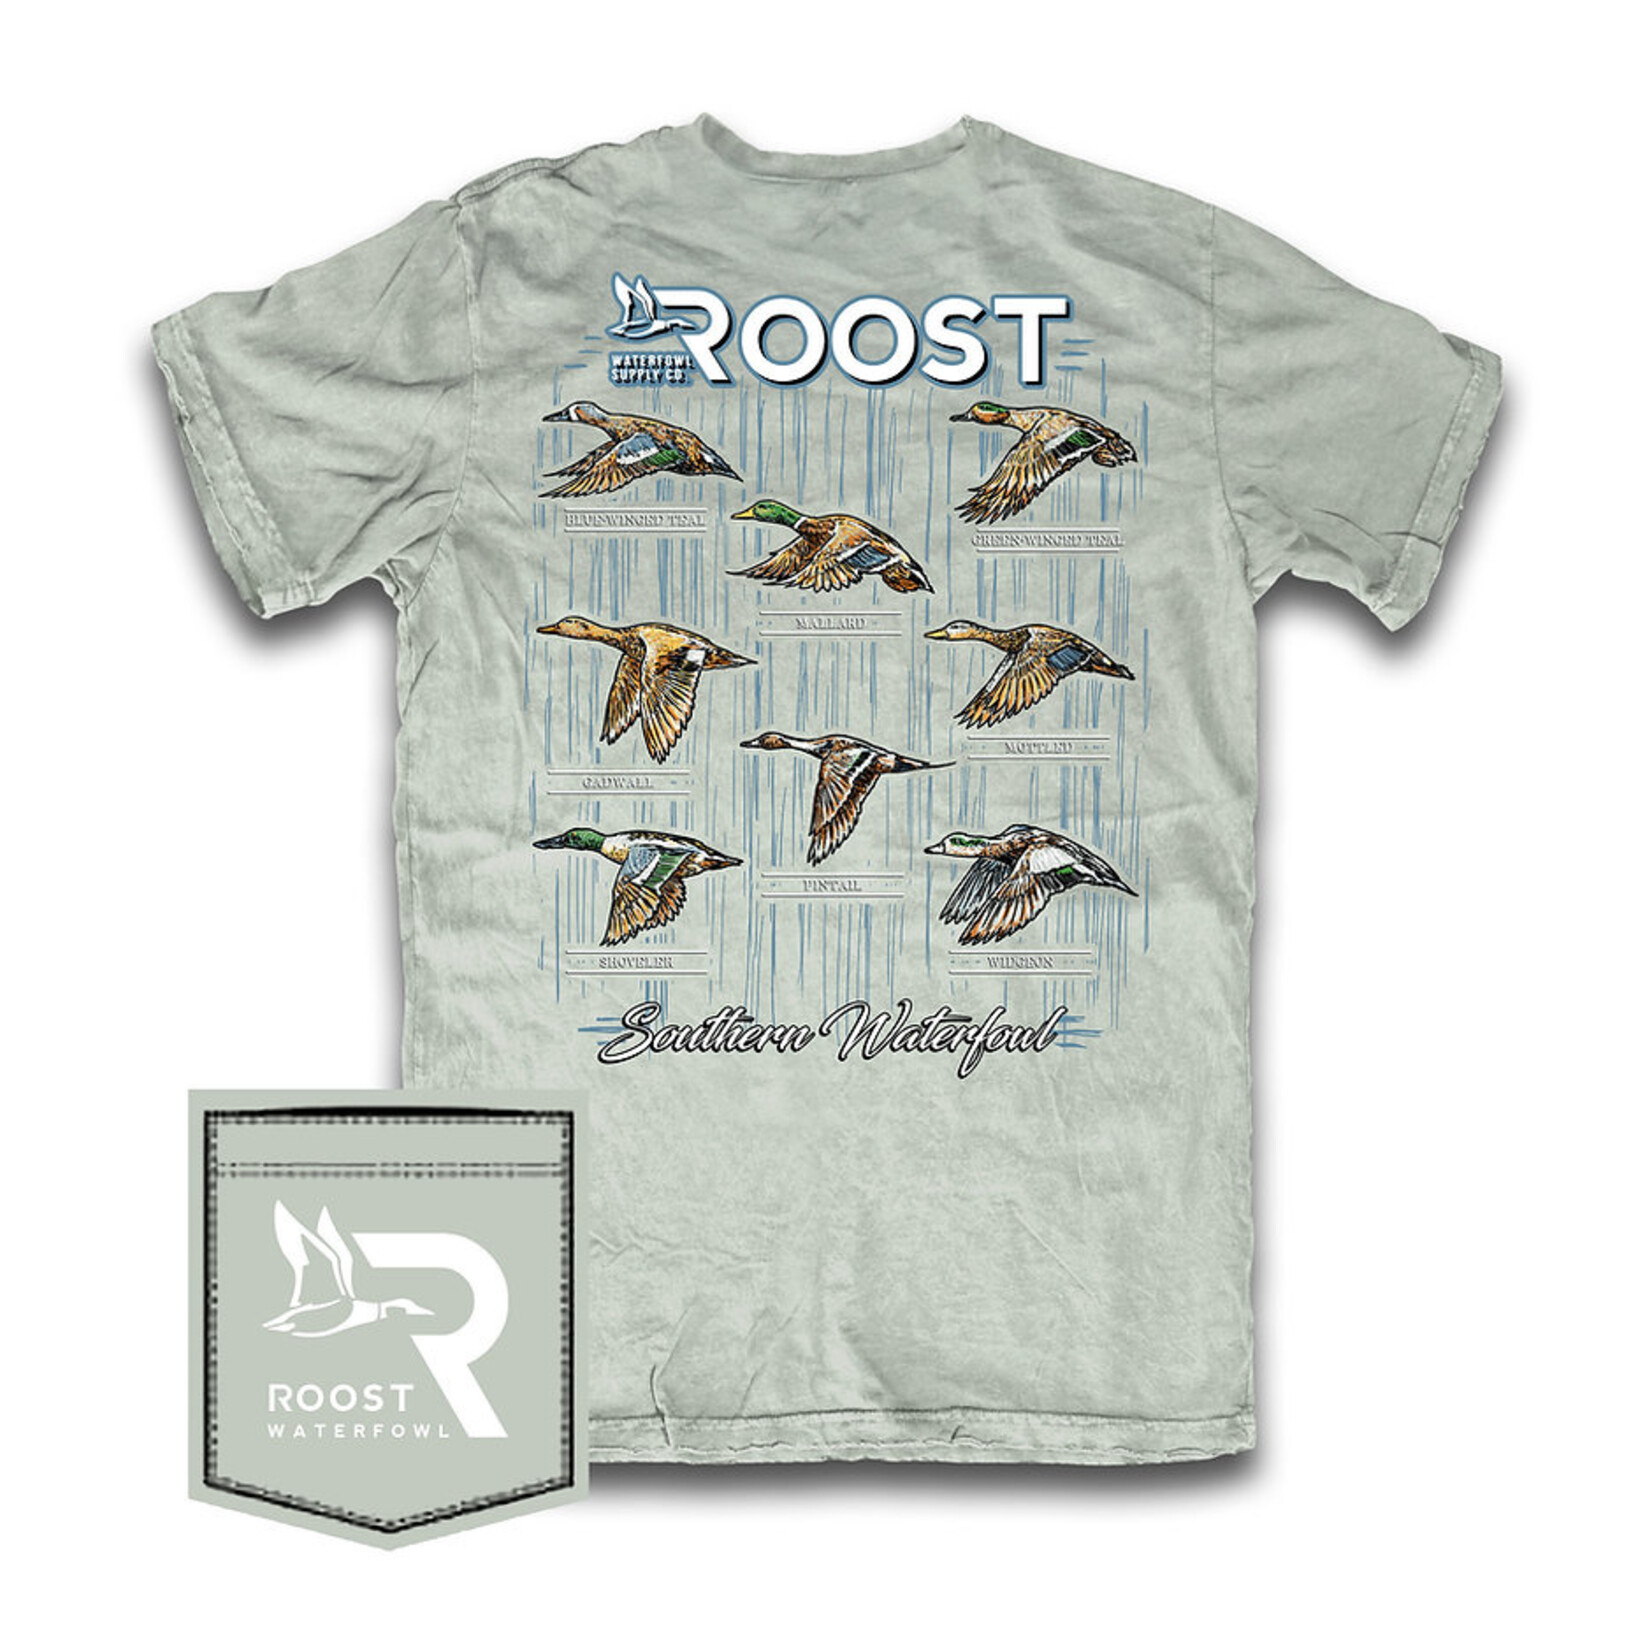 Roost Waterfowl Roost Waterfowl Southern Waterfowl S/S TEE Shirt